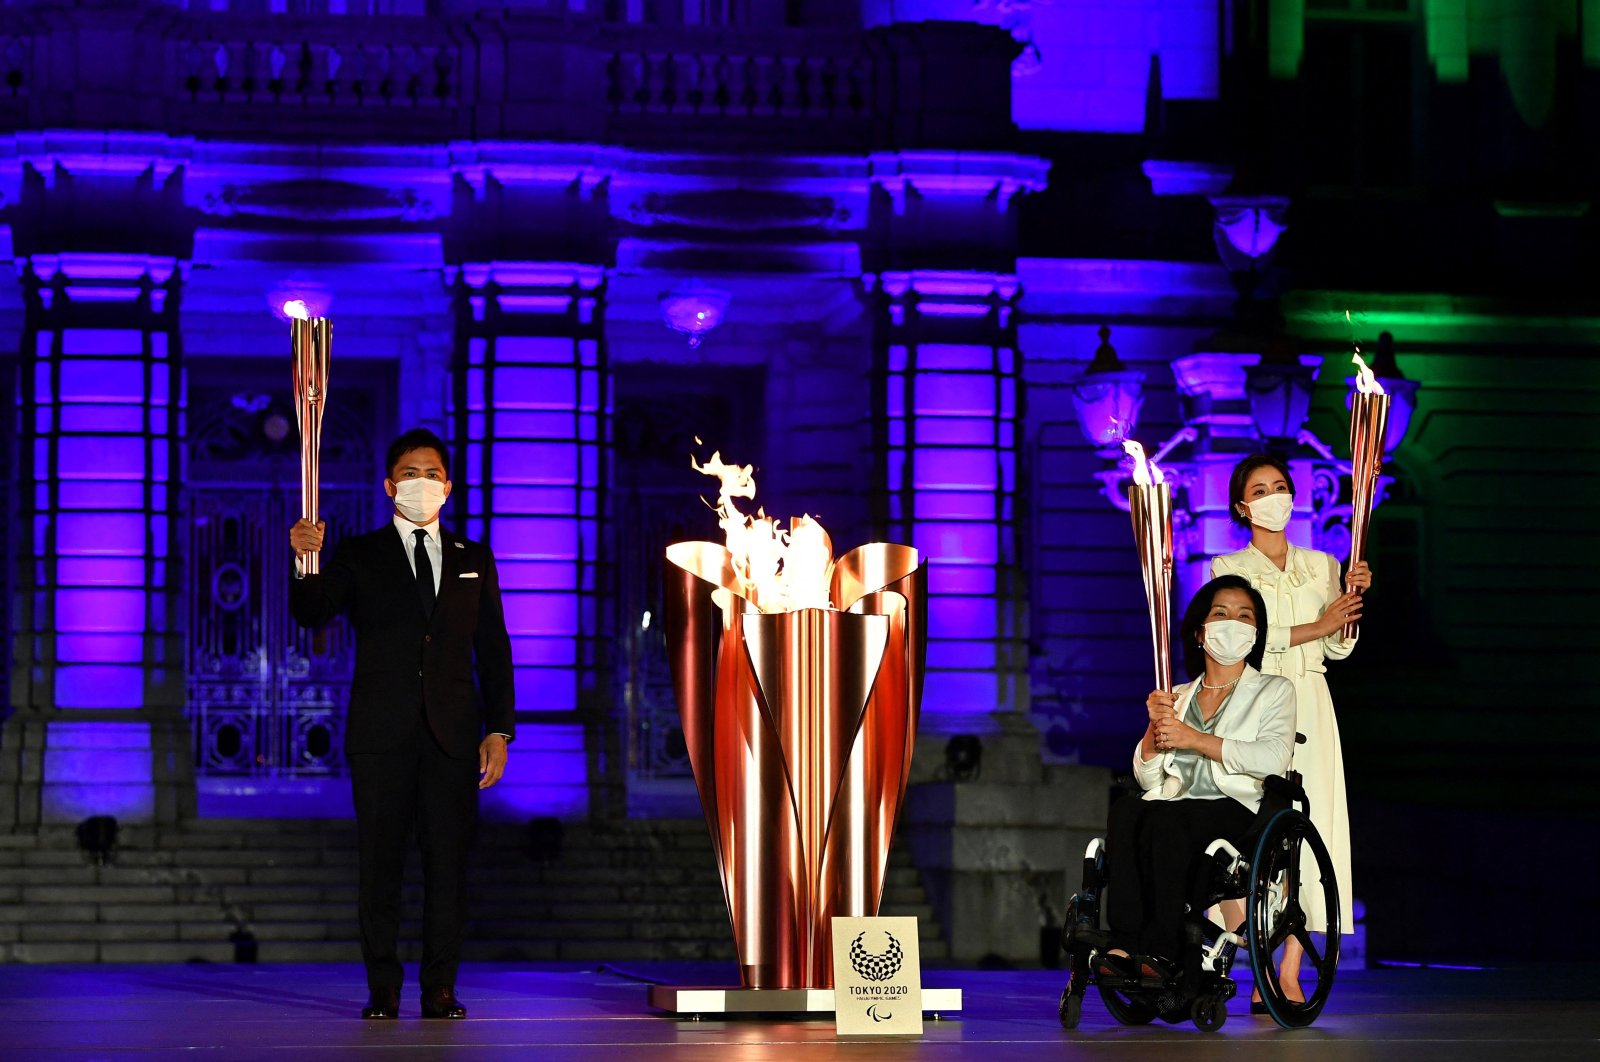 Tokyo 2020 Torch Relay Official Ambassadors Tadahiro Nomura (L), Aki Taguchi (2nd R), Satomi Ishihara (R) take part in the Paralympic Flame Lighting Ceremony at the State Guest House Akasaka Palace, Tokyo, Japan, Aug. 20, 2021. (AFP Photo)